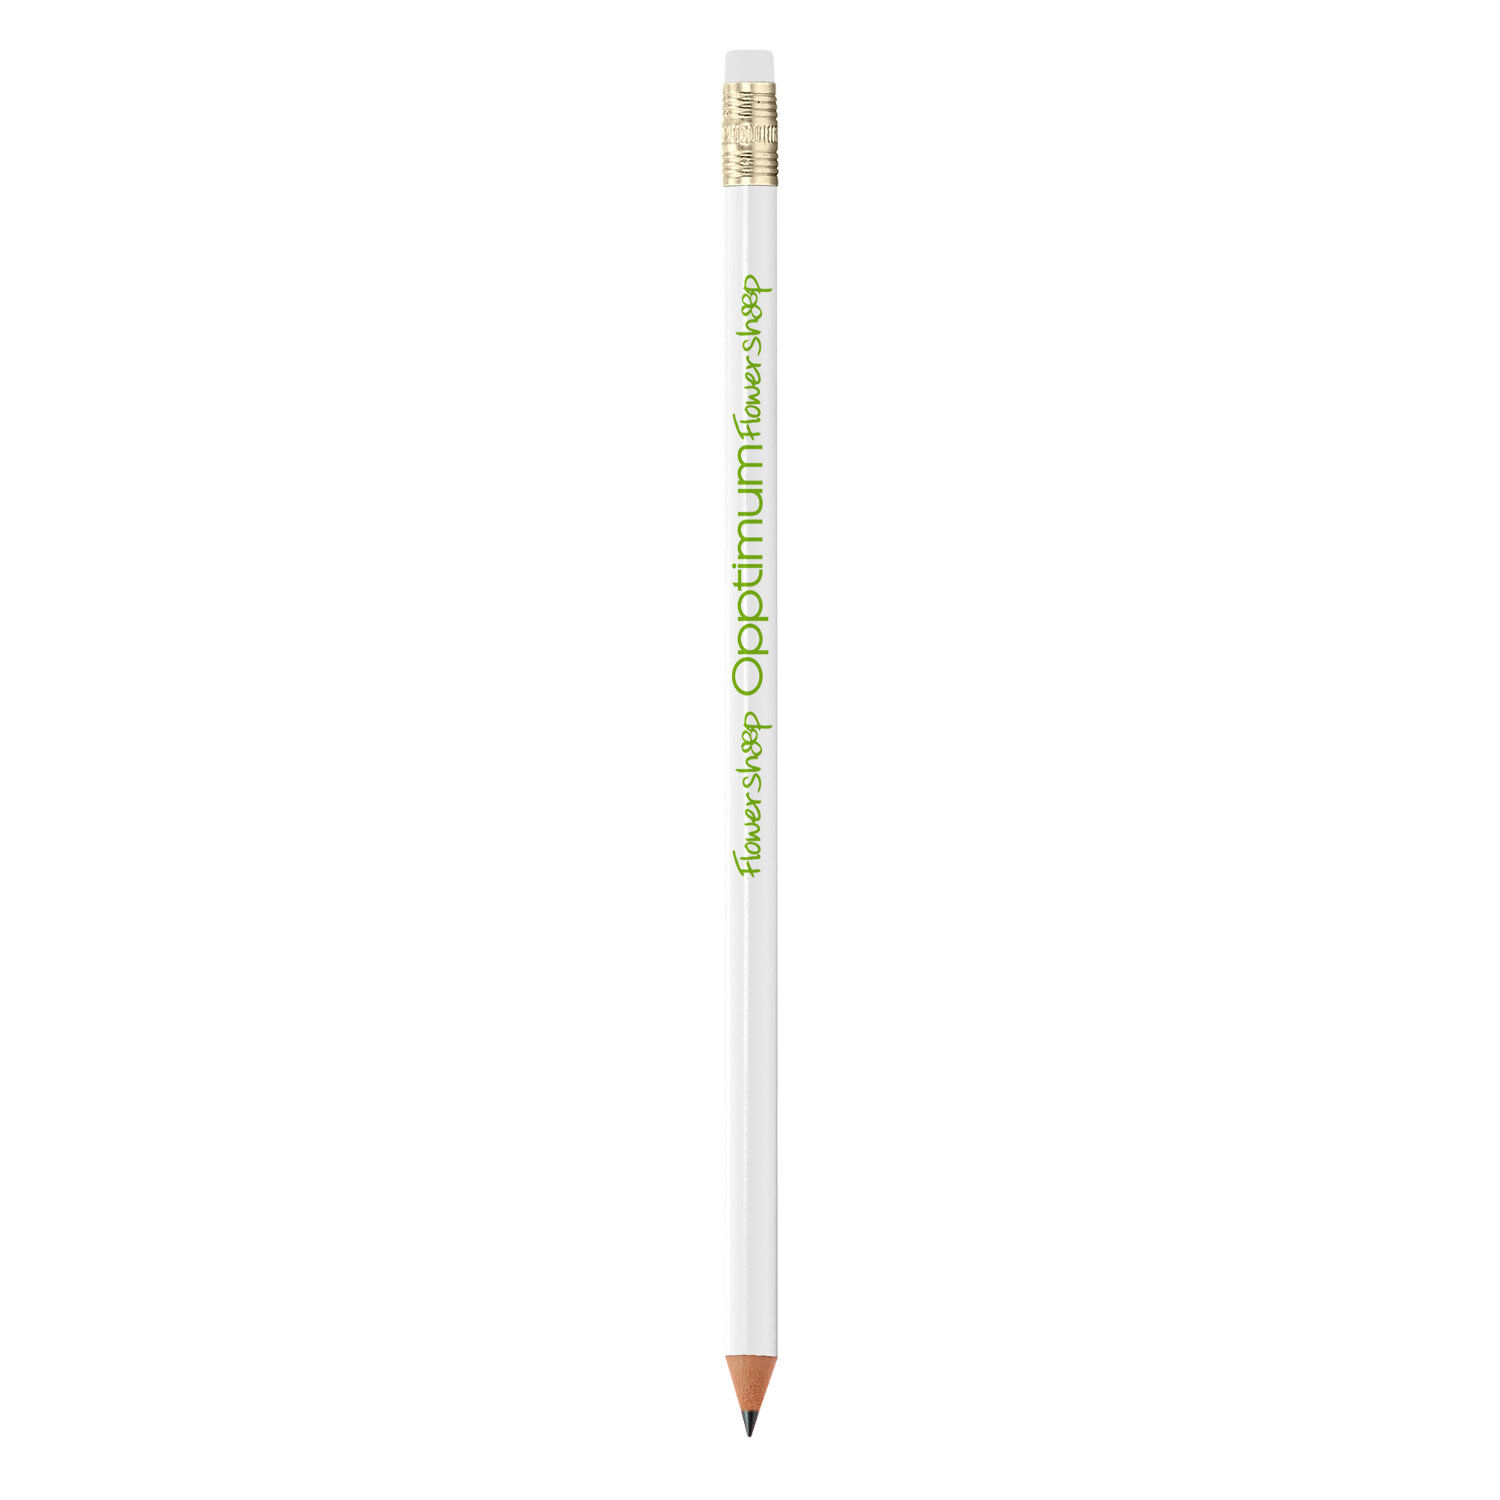 BIC Evolution Recycled Eraser Pencil